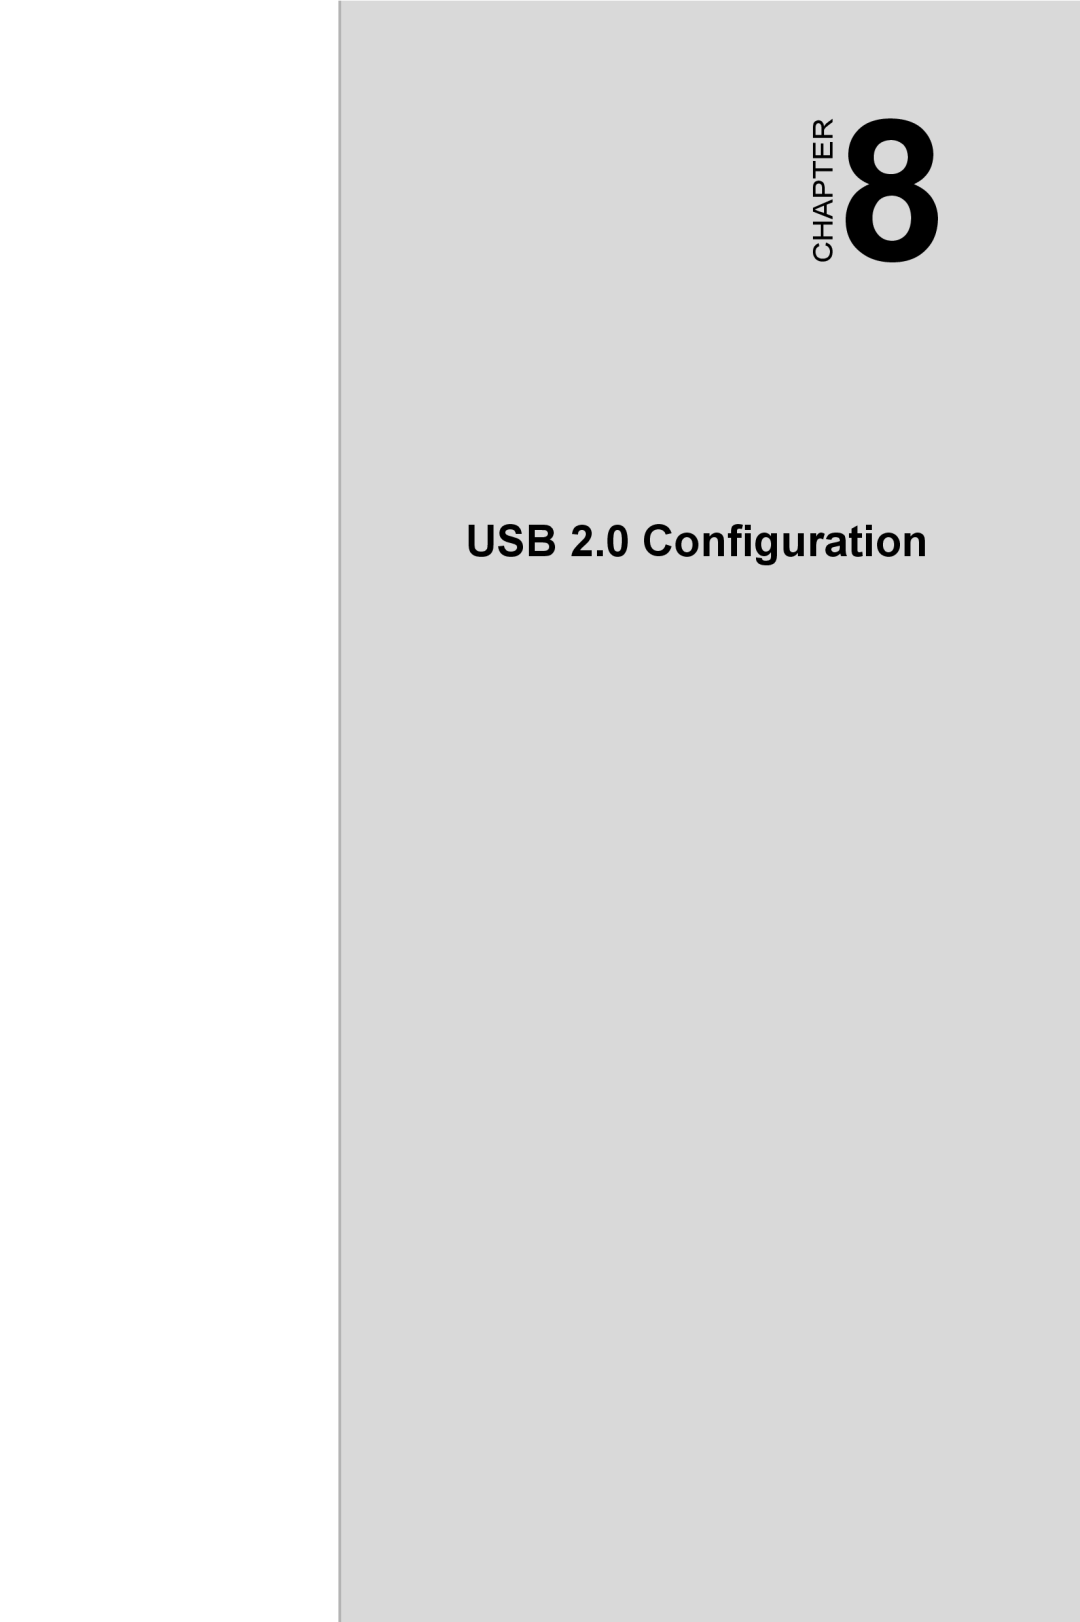 Advantech PCA-6187 user manual USB 2.0 Configuration, Chapter 